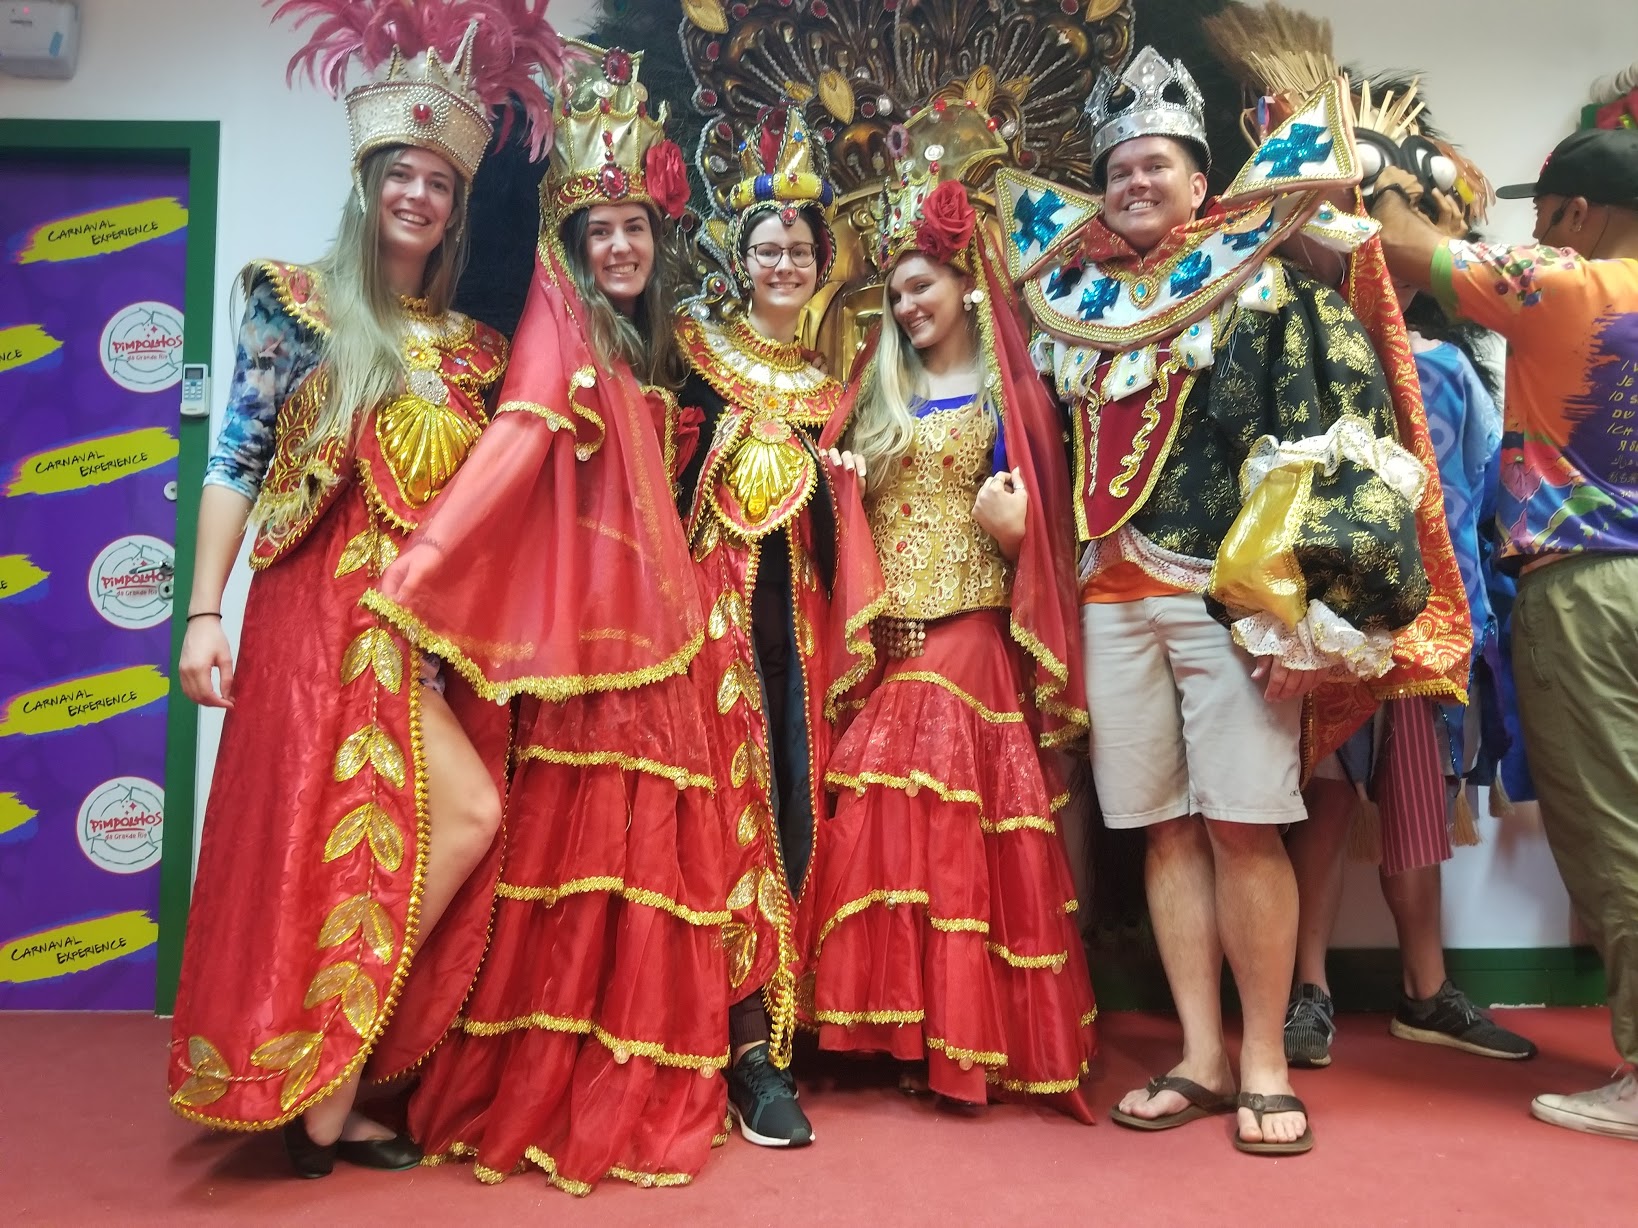 Sara Londono with her MIB classmates in Brazilian Carnival Costumes